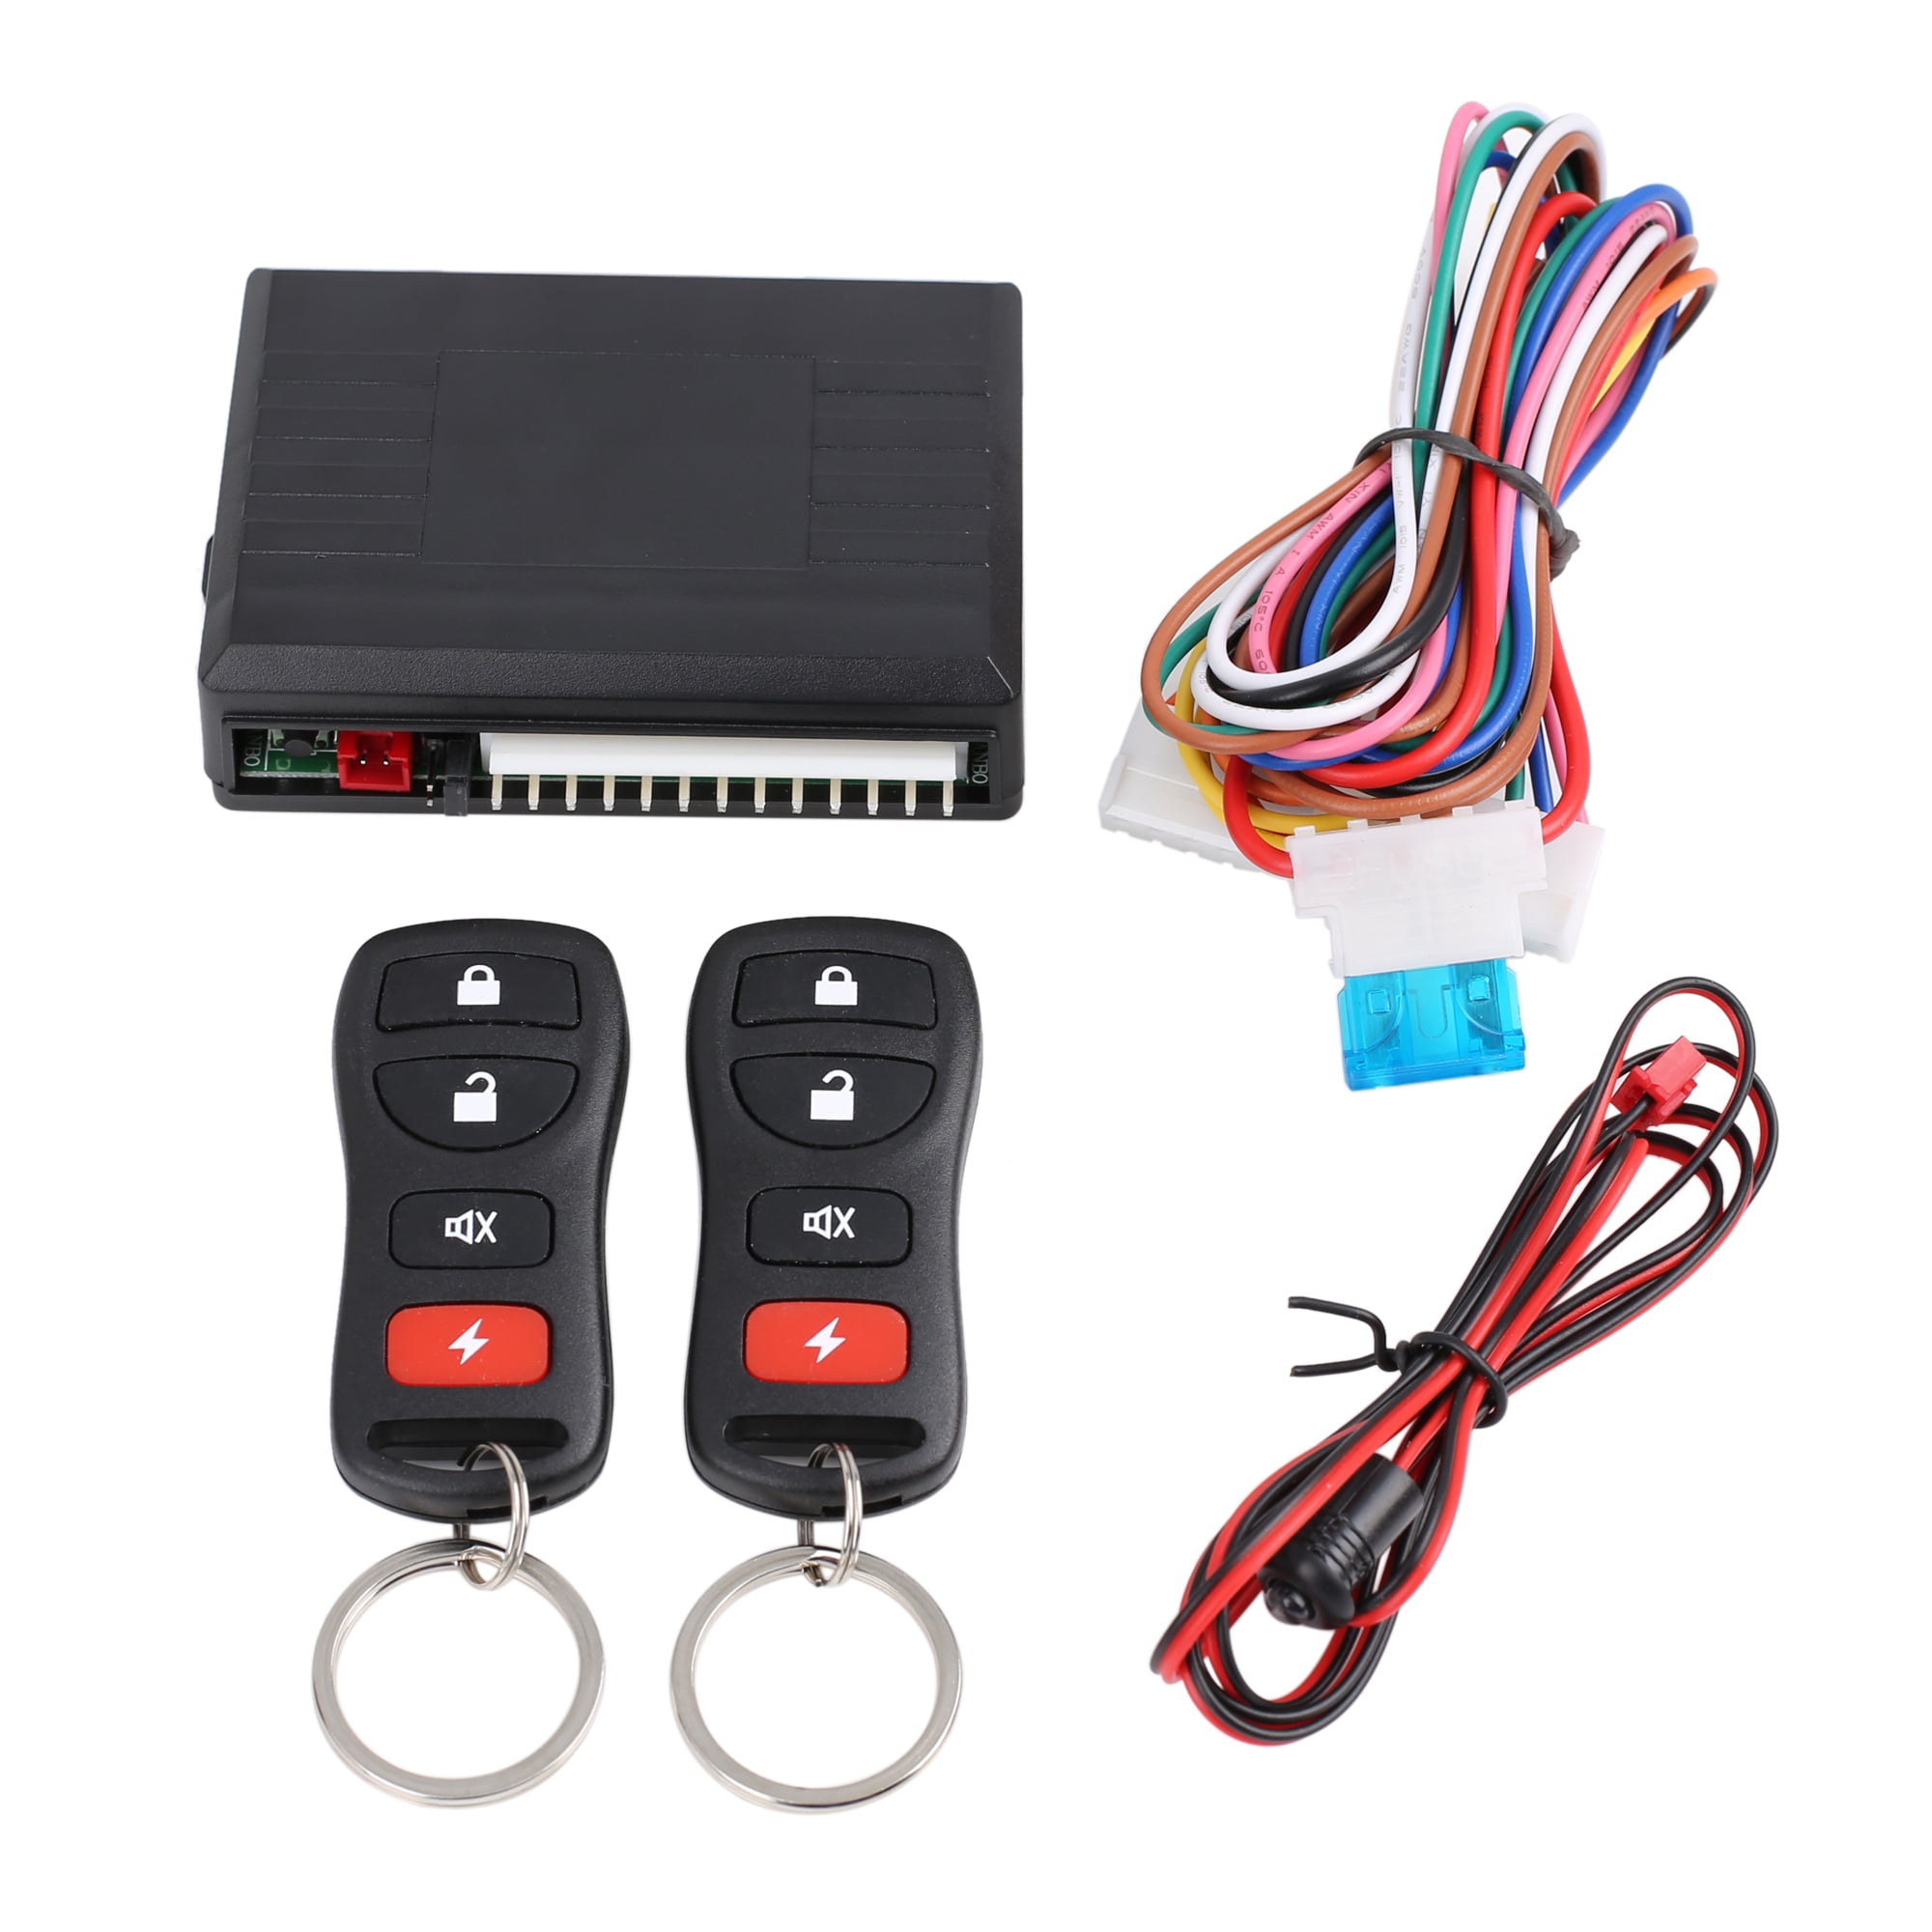 Universal Car Remote Control Central Kits Door Lock Locking Keyless Entry System